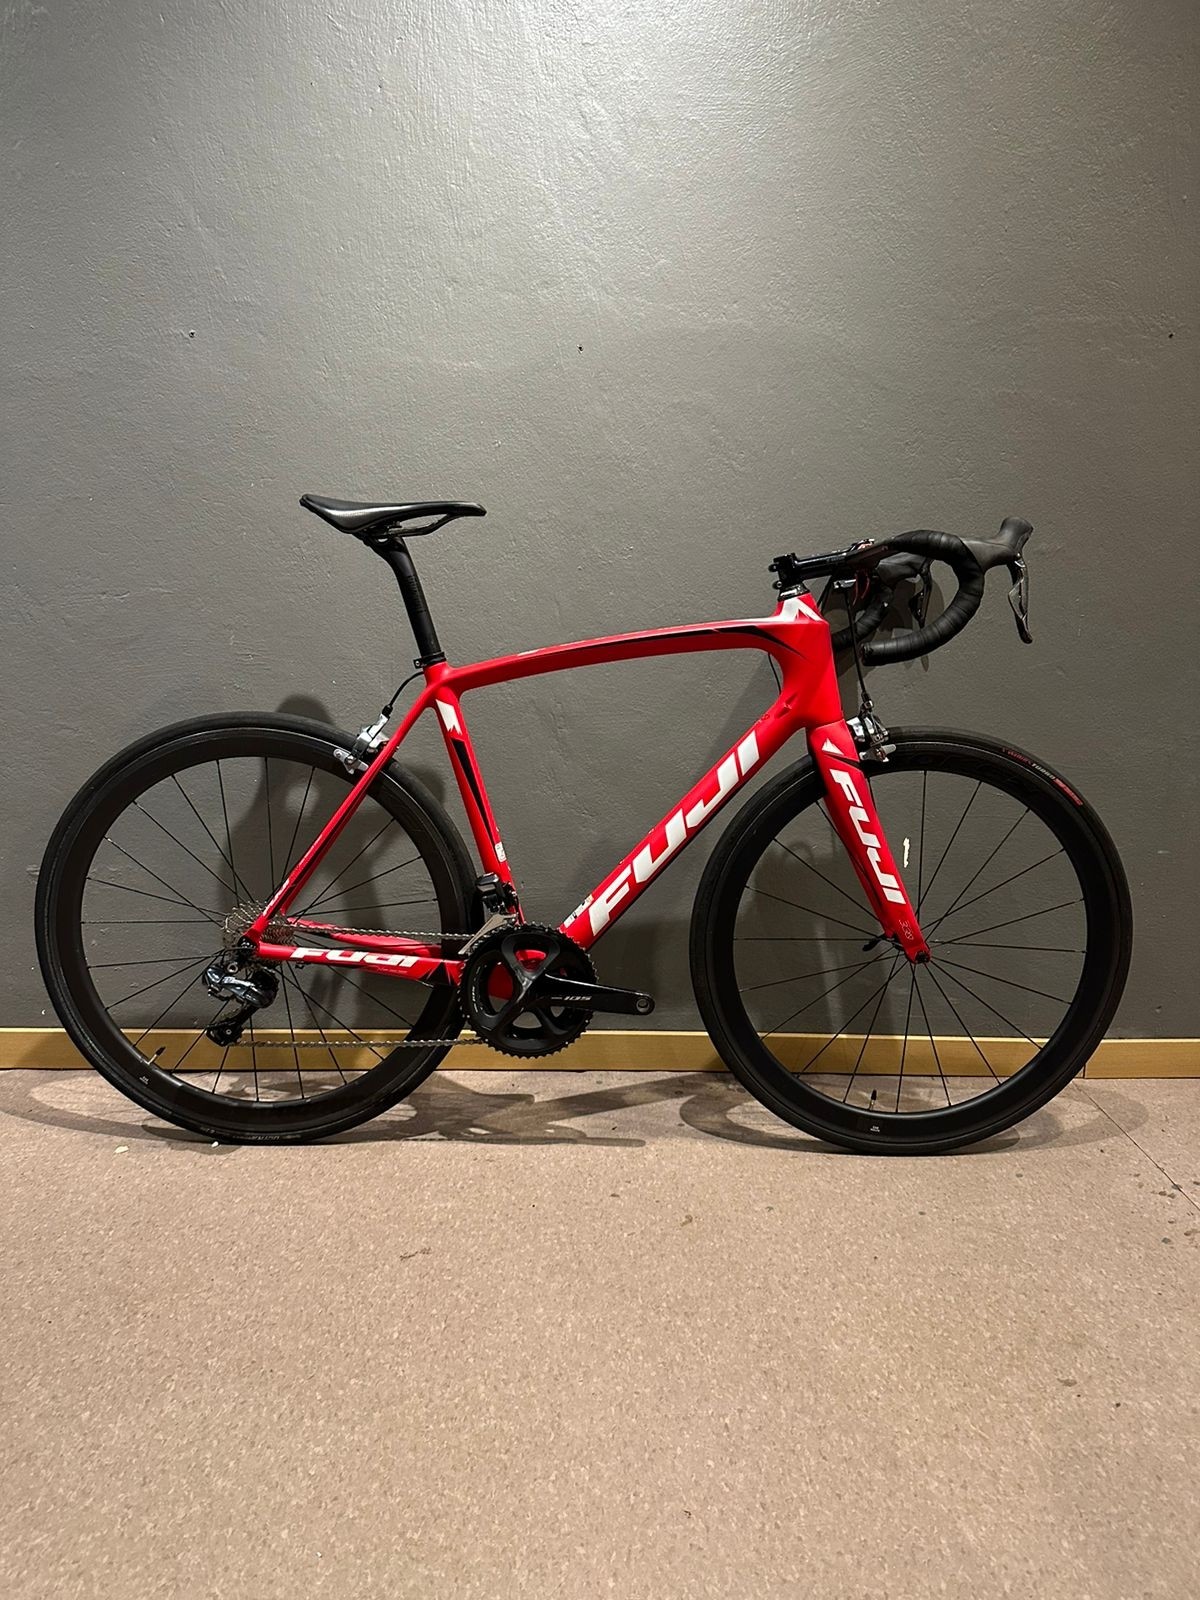 Bicicleta Seminova Fuji Granfondo 1.1 Carbon 2020  Tamanho 56